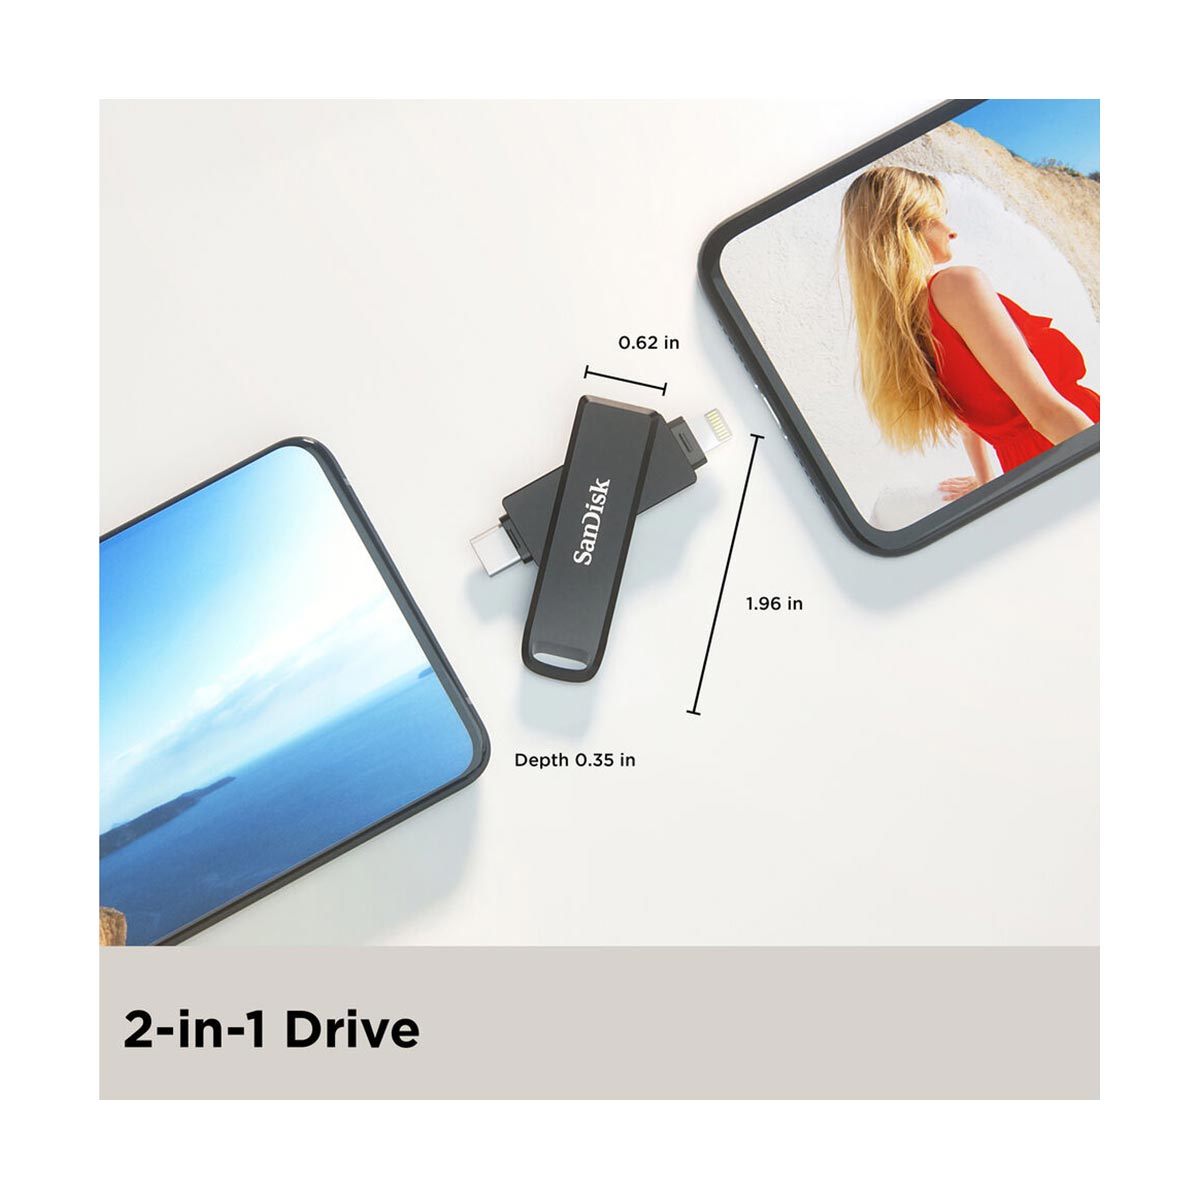 SanDisk iXpand 256GB USB-C Flash Drive